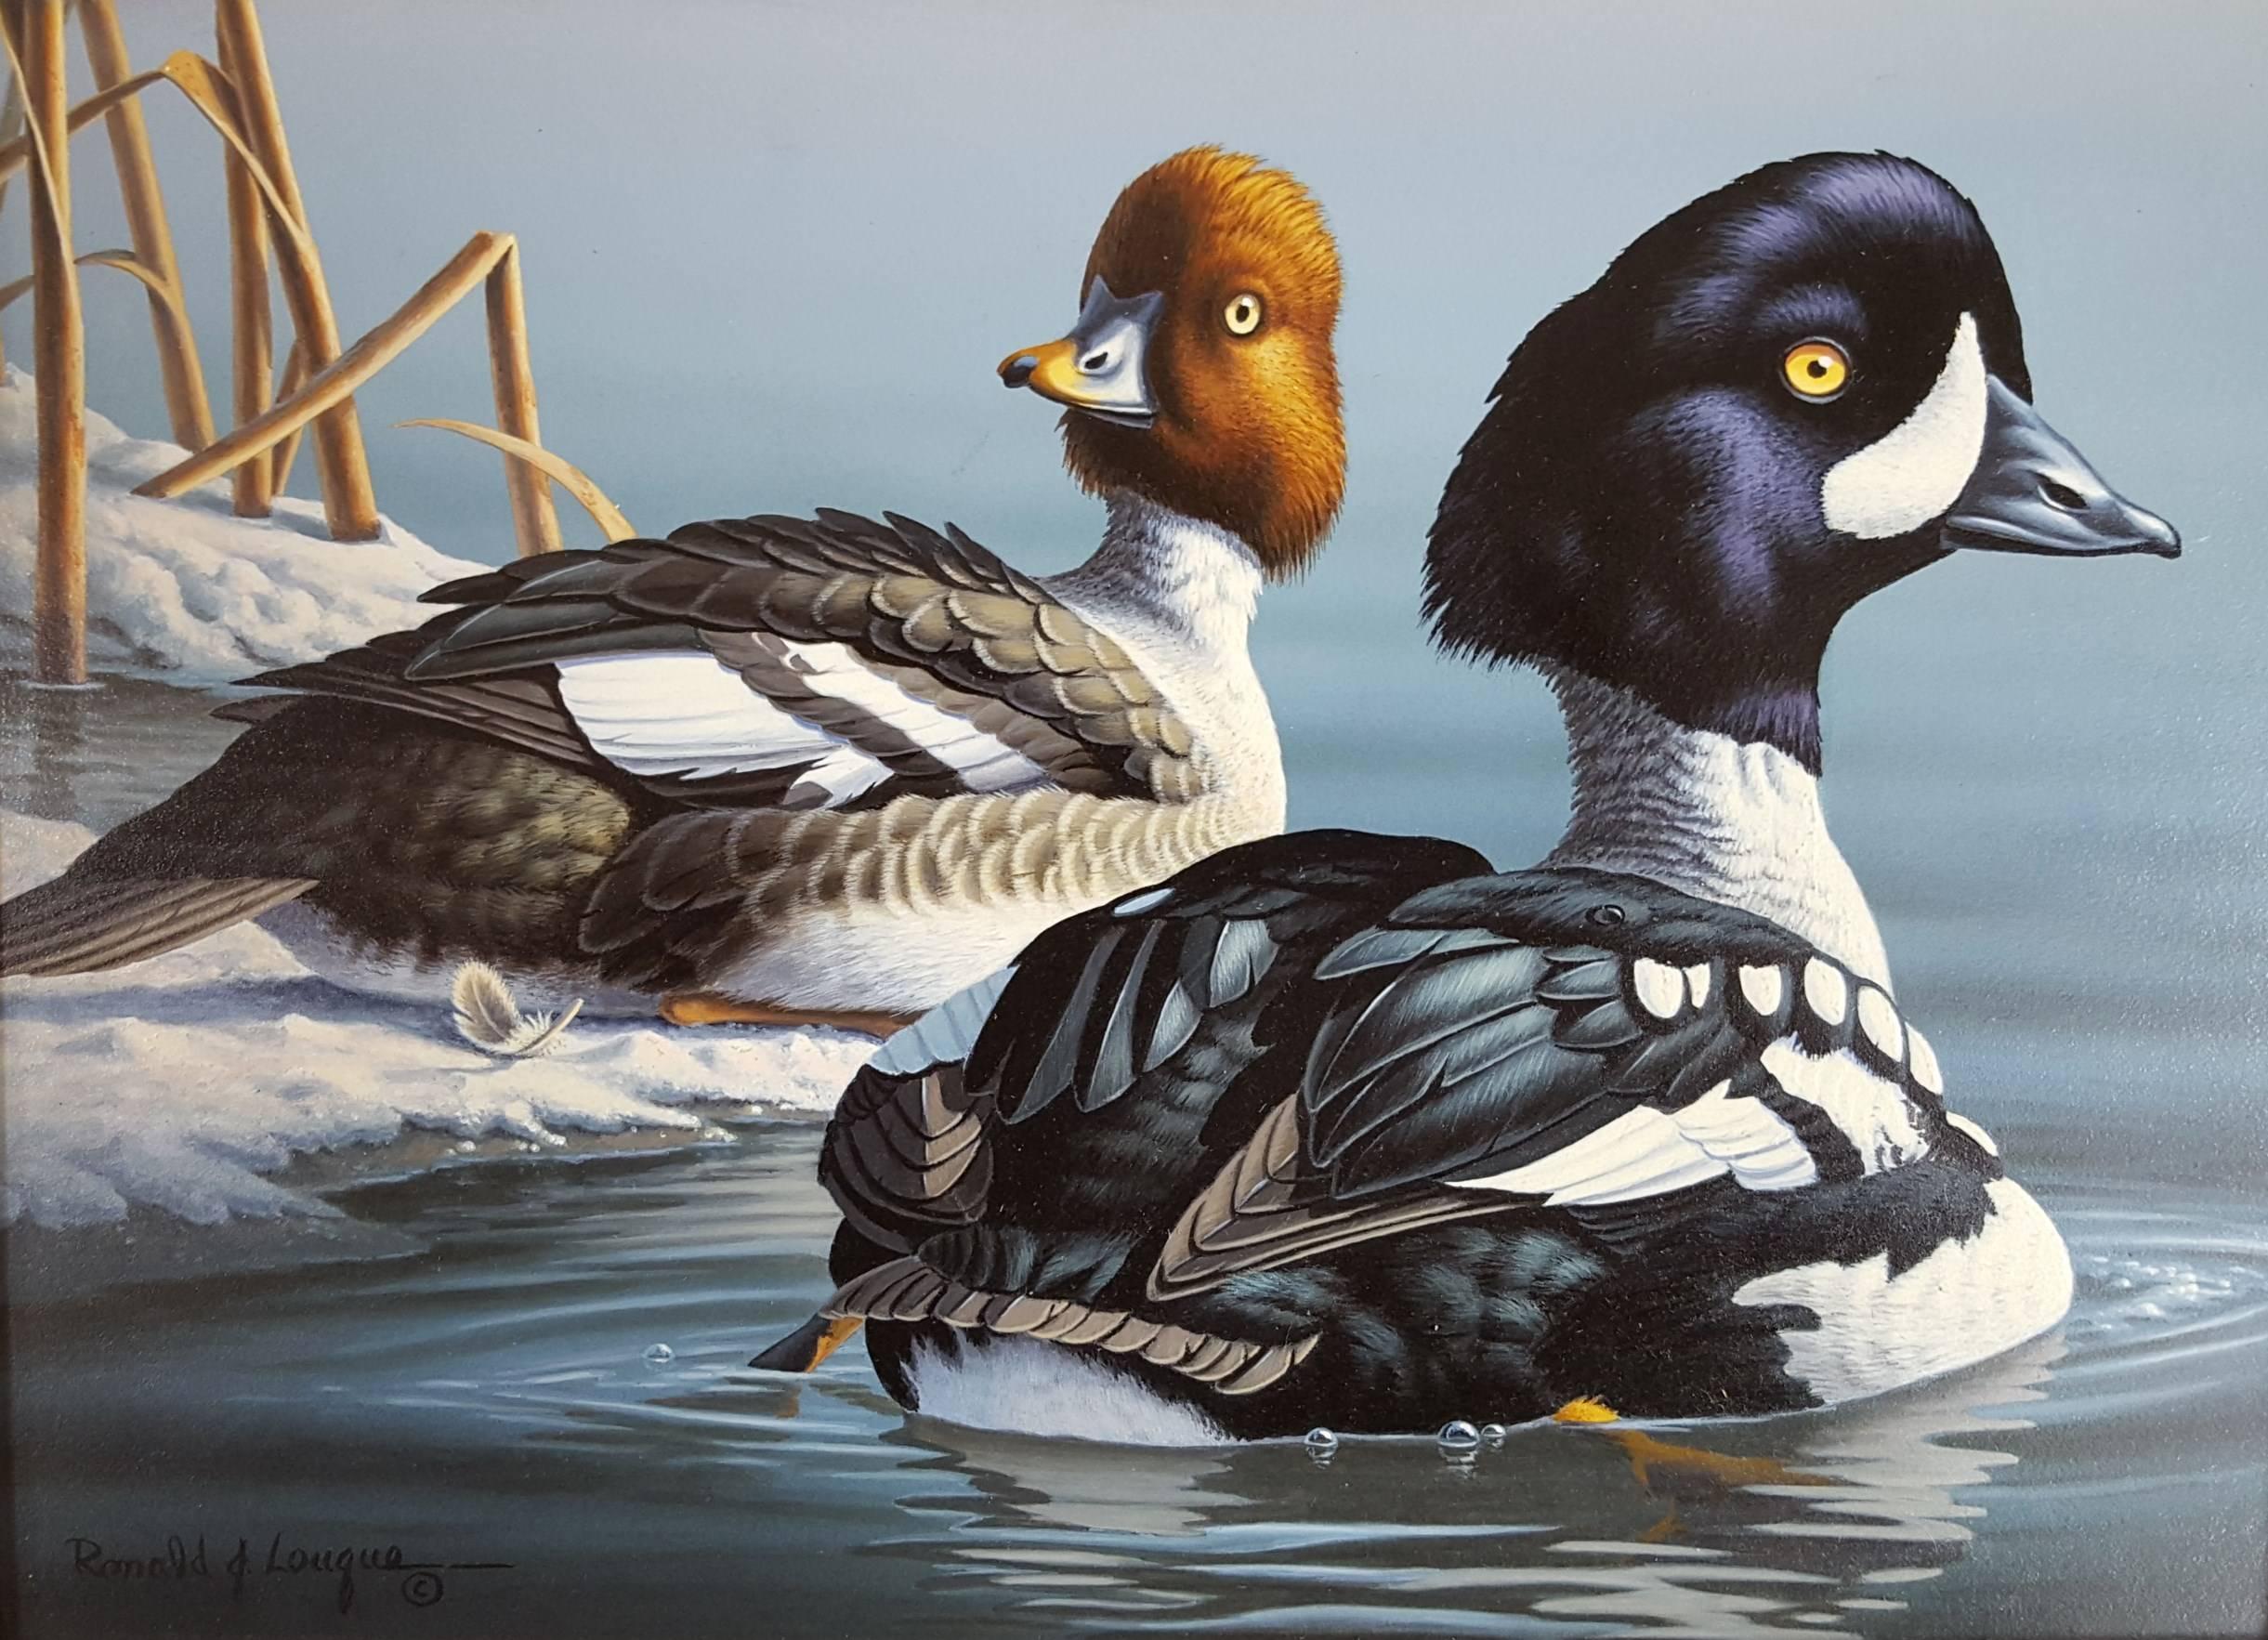 Animal Painting Ron Louque - Garrot d'Islande /// Canard Contemporain Oiseau Faune Ornithologie Peinture Art